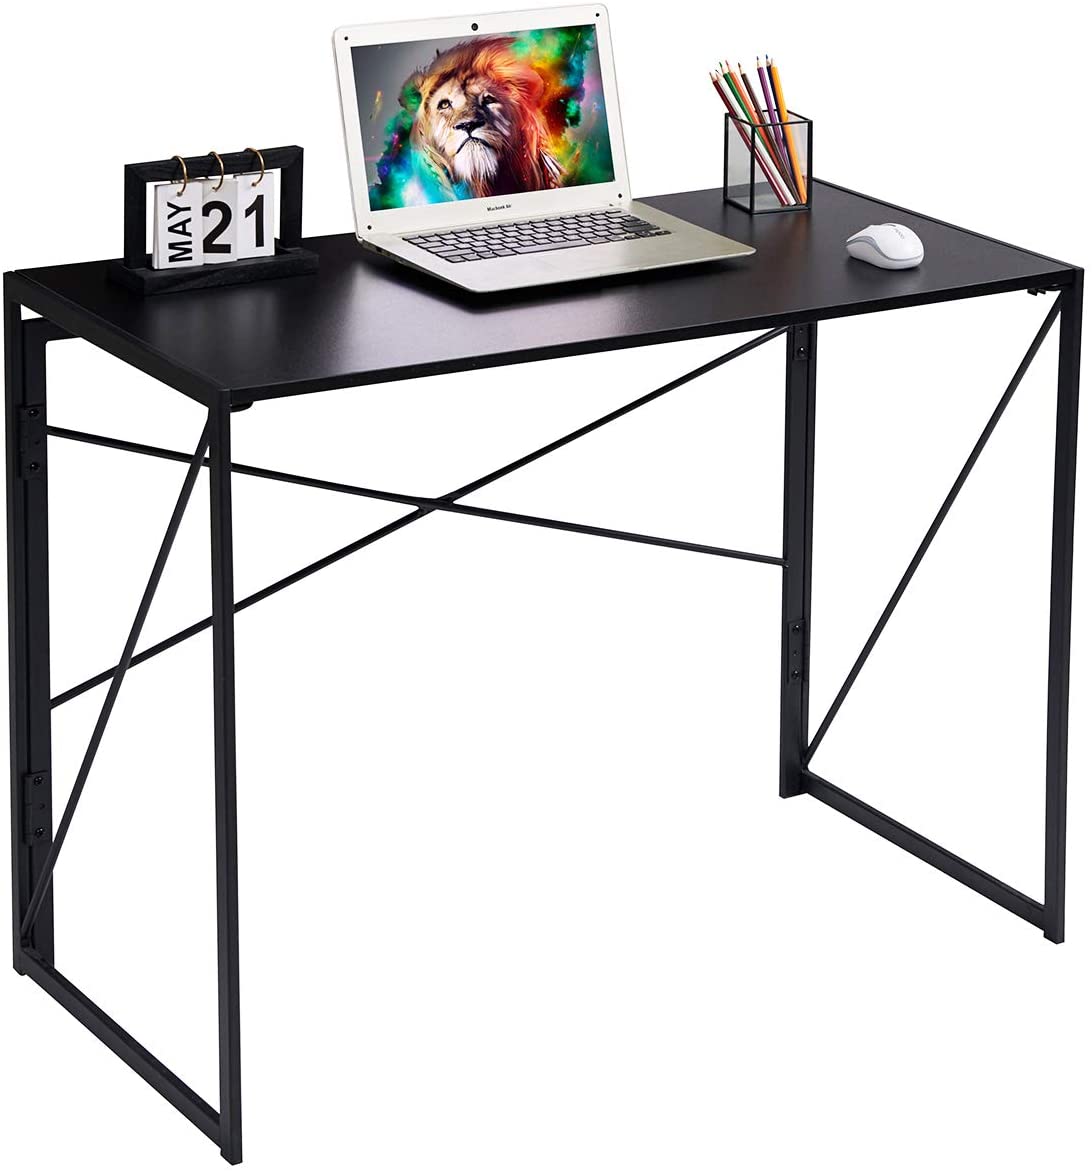 OAK Line Aingoo Folding Computer Desk Folding Laptop Table Simple Writing Desk No Assemble Desk Home Office Desk for Adult /& Kids